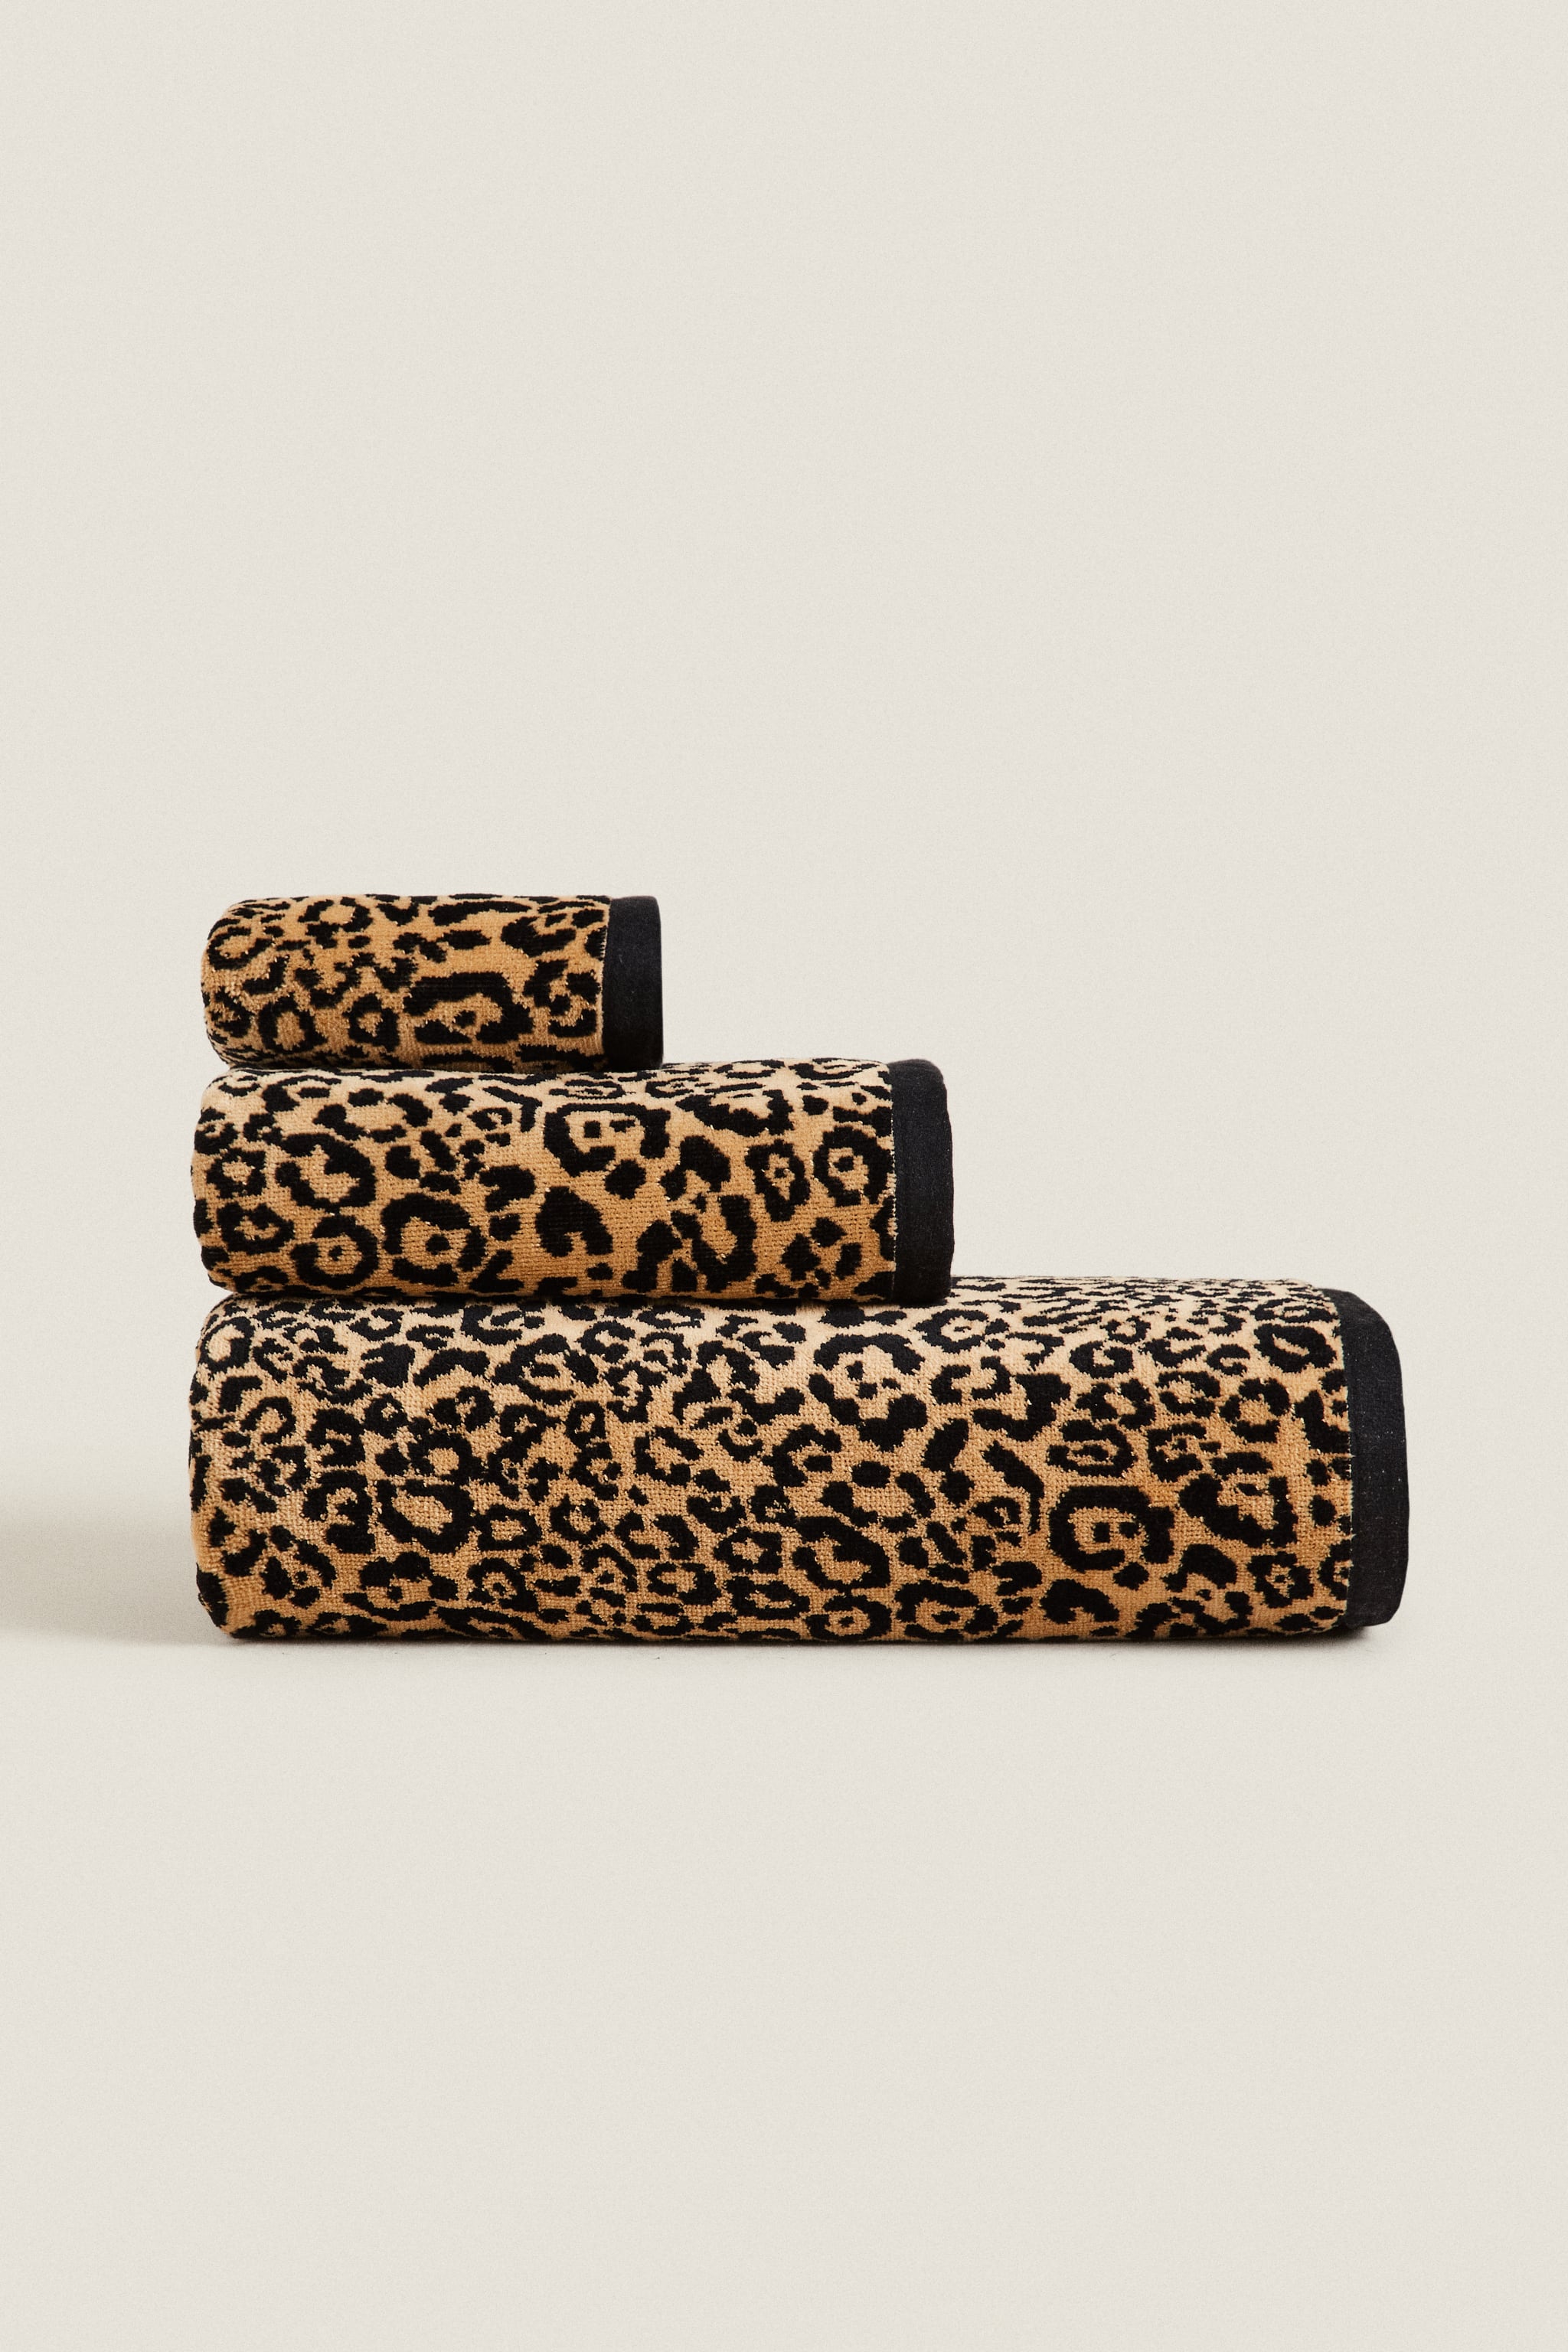 цена Велюровое полотенце с леопардом Zara, леопард